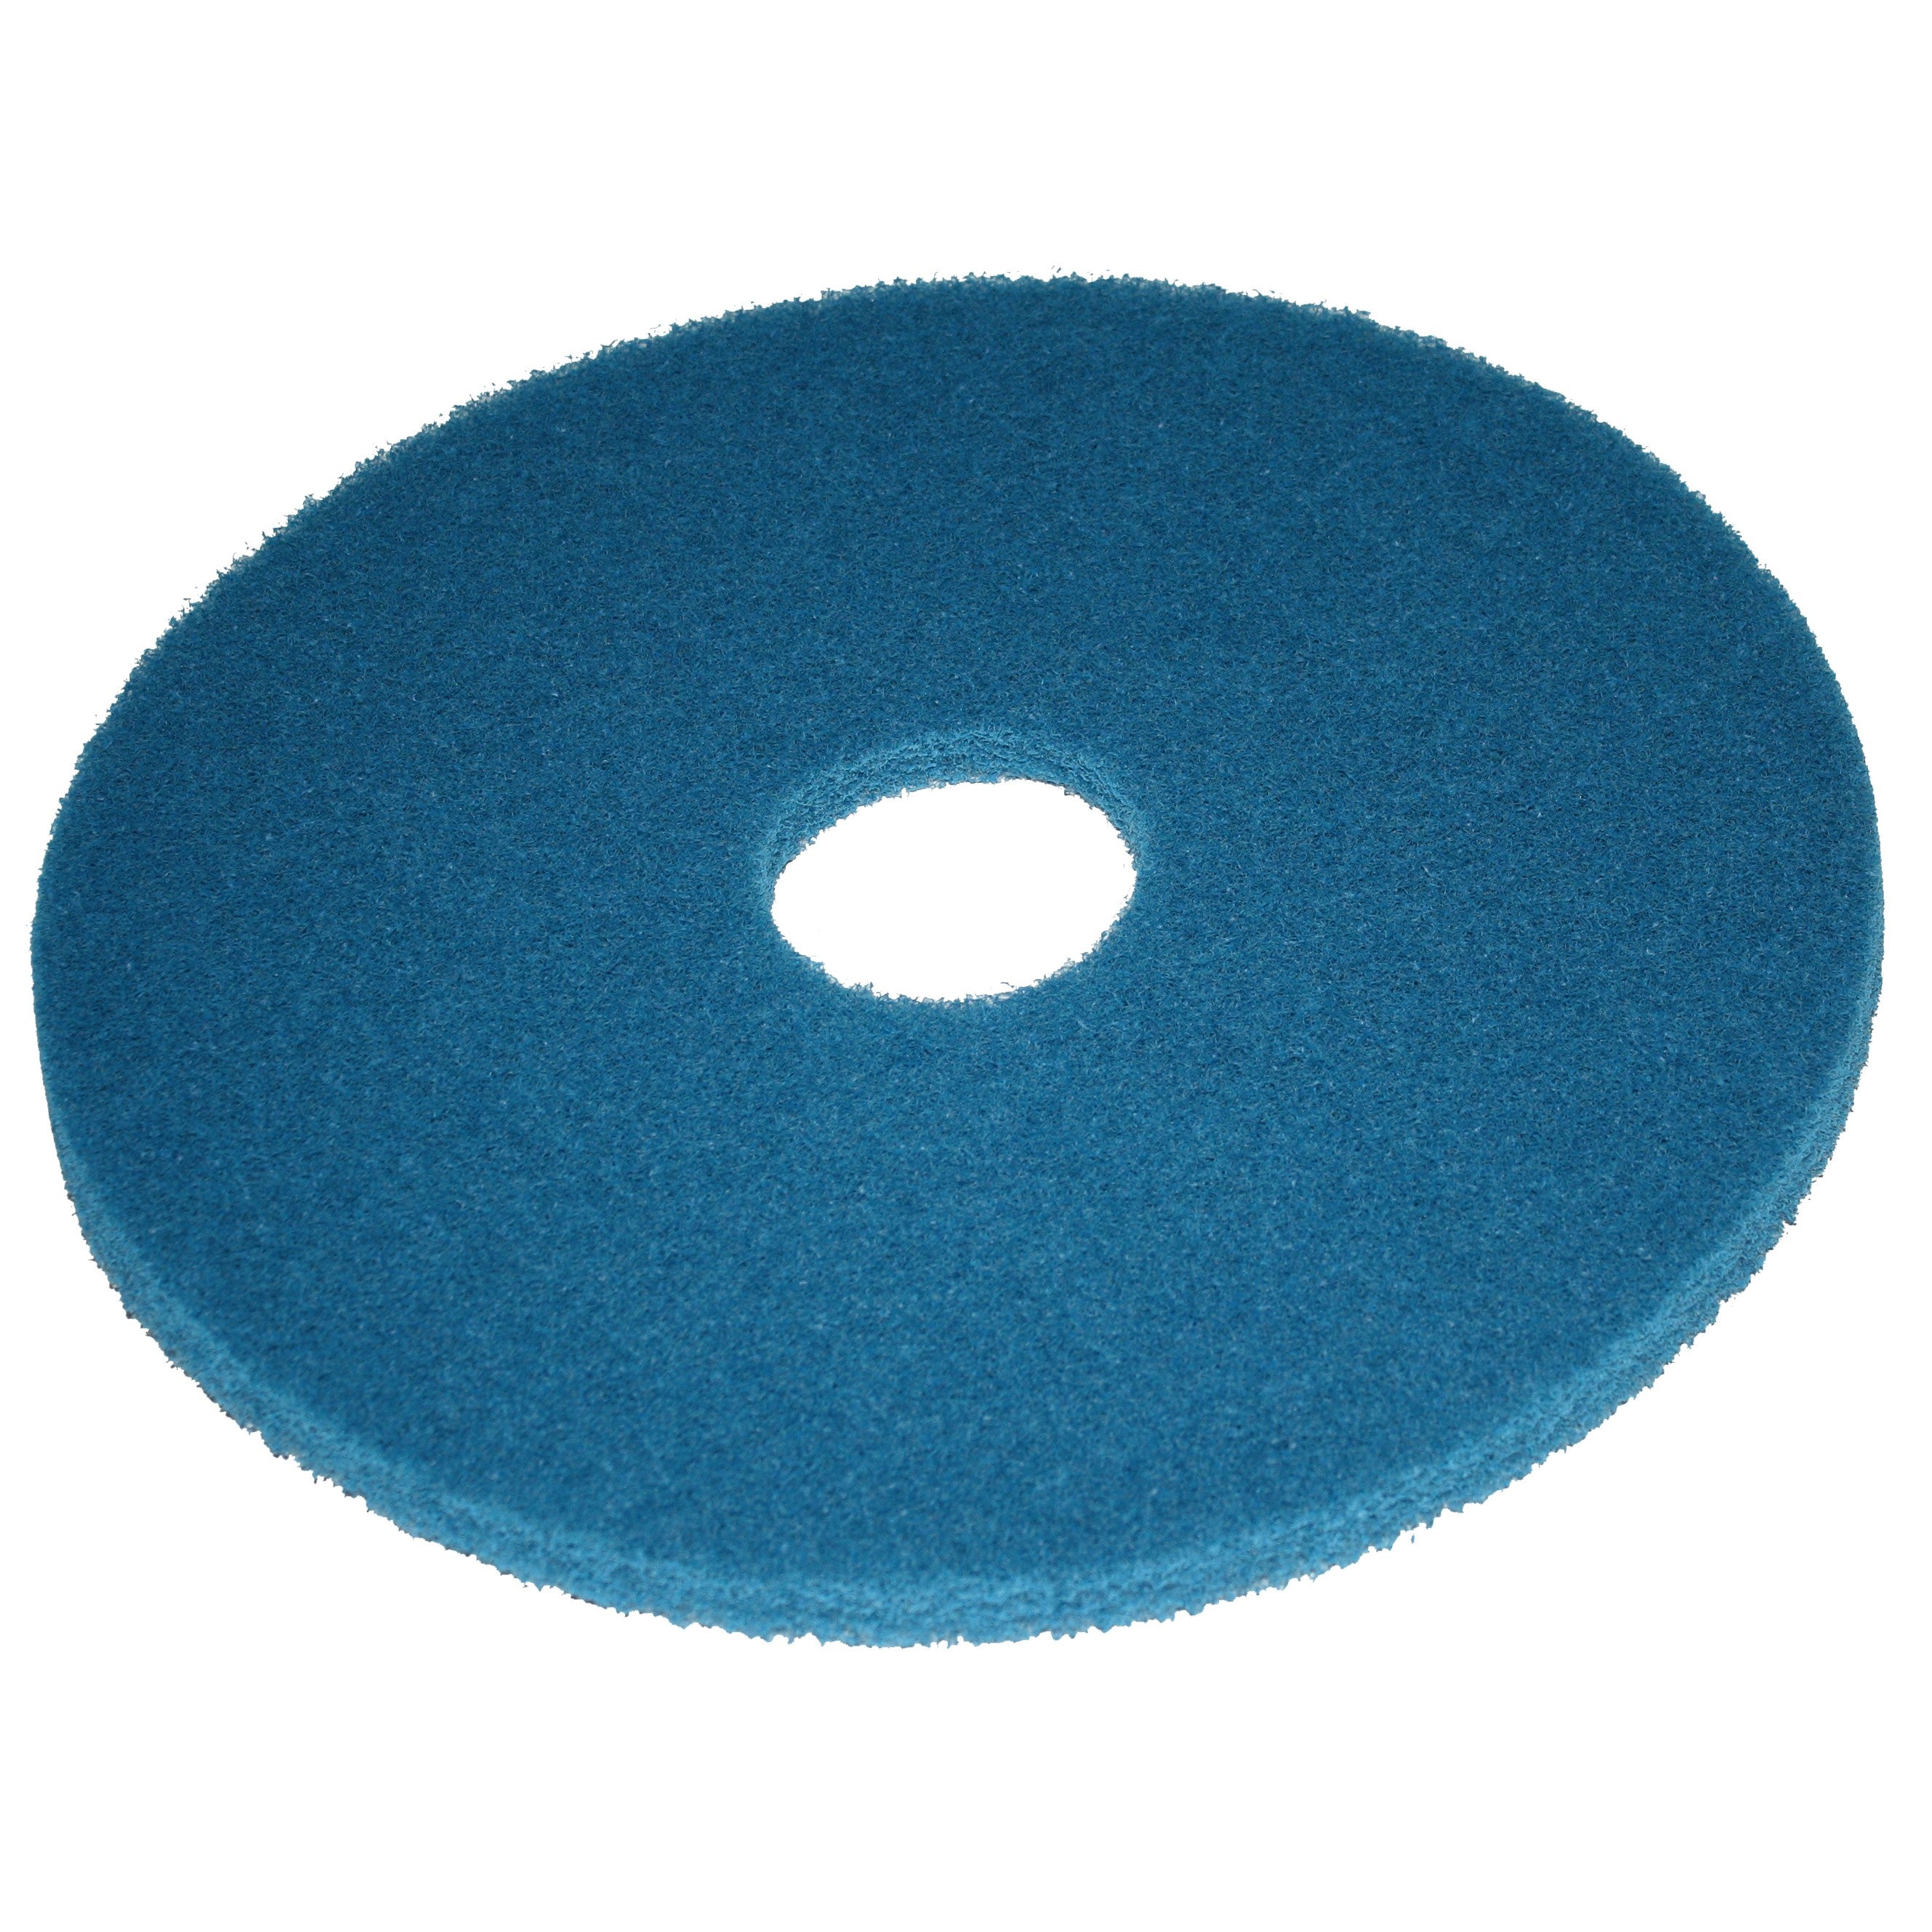 Pad blau, Ø 532 mm, Polyester